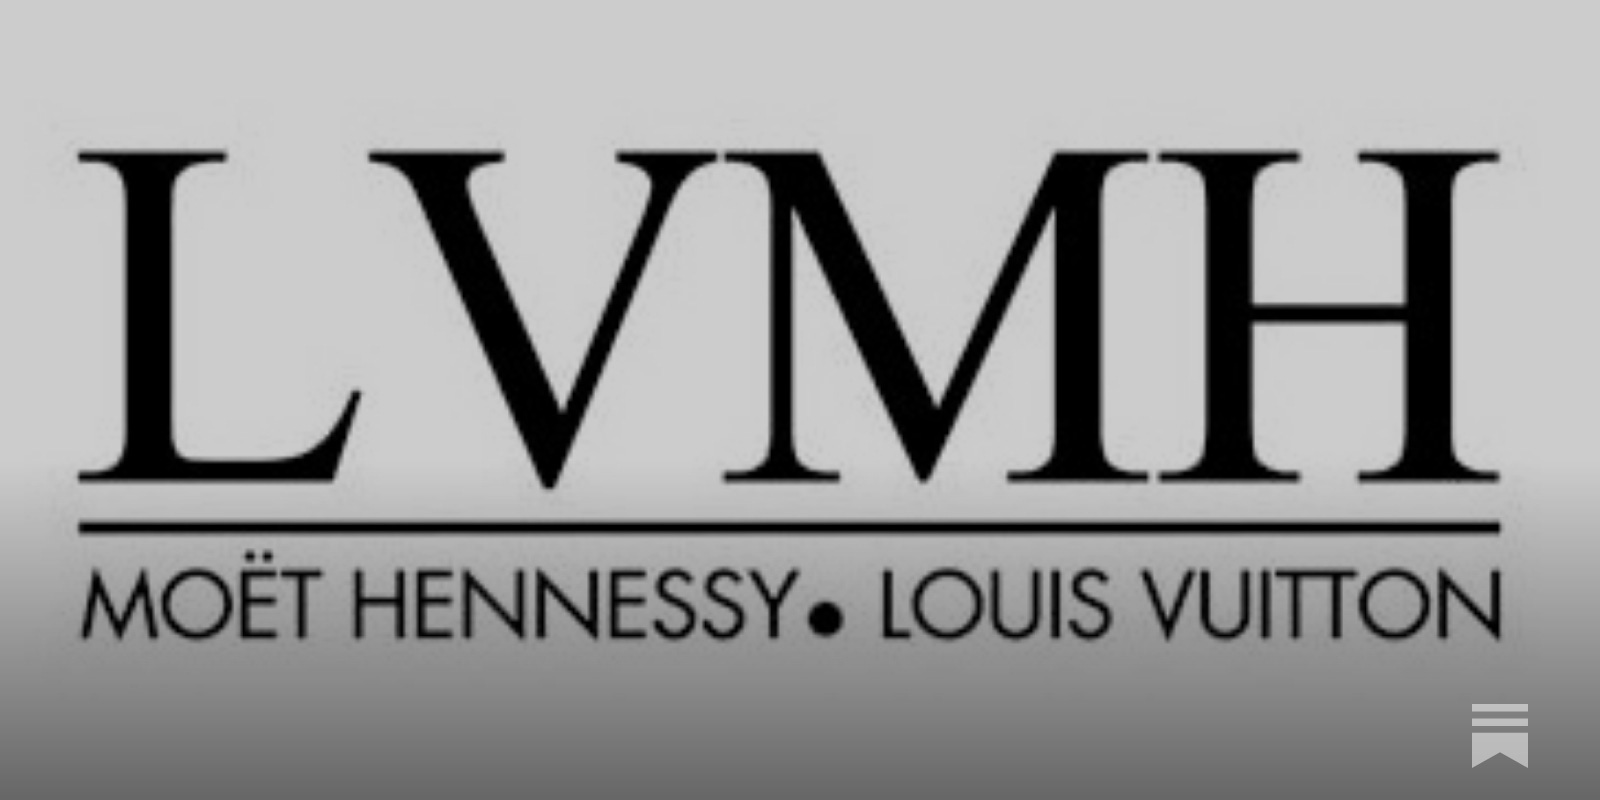 Lvmh, Thelios annuncia la partnership con Givenchy nel settore eye